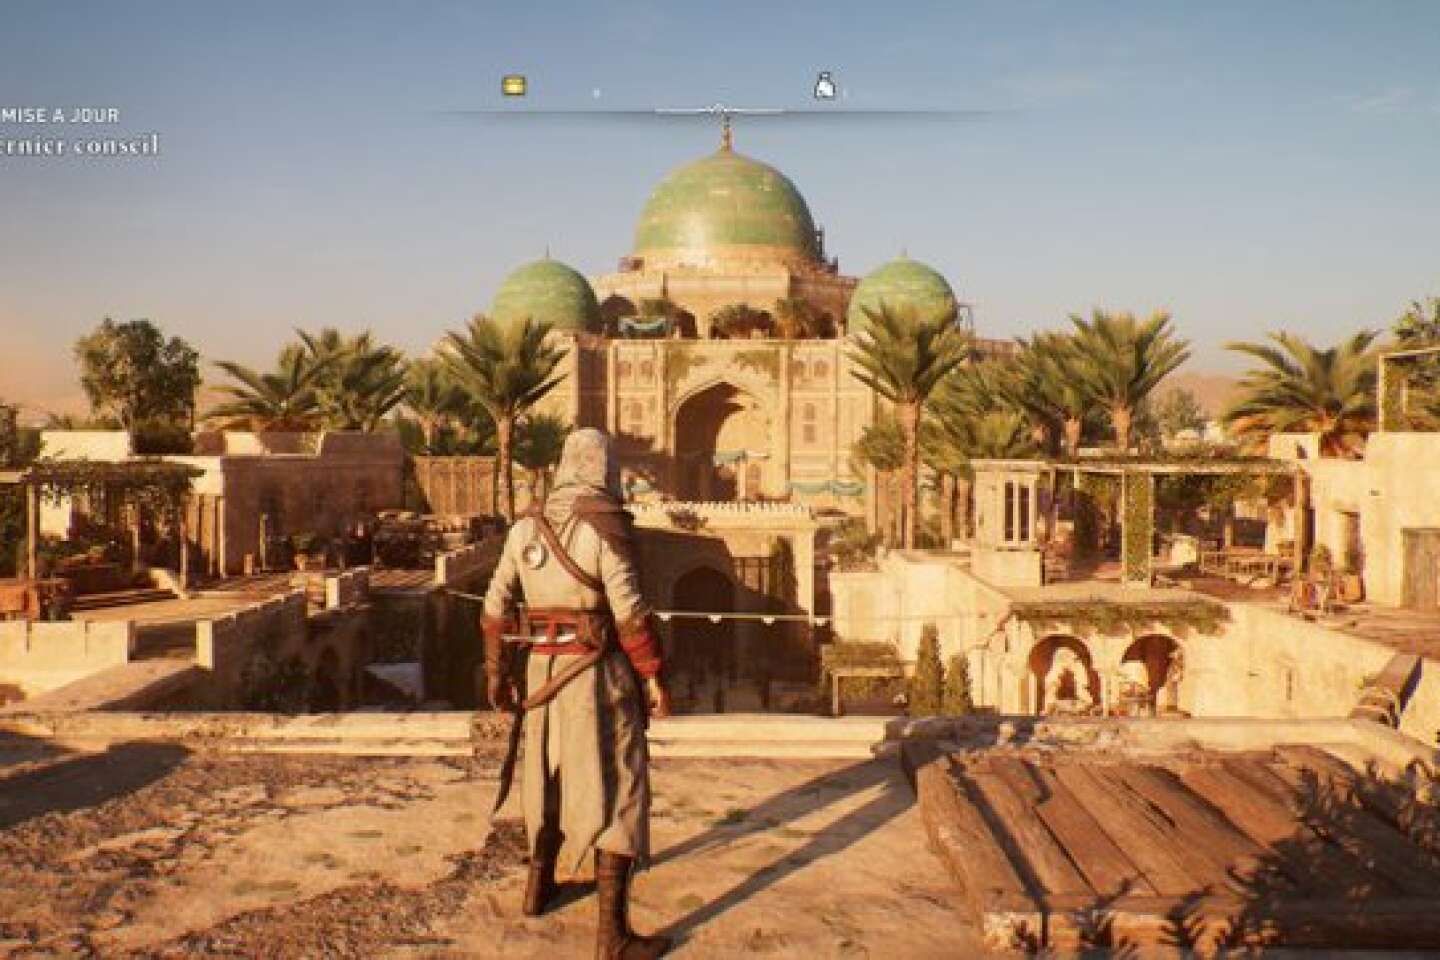 « Assassin’s Creed : Mirage », un épisode modeste qui fait illusion